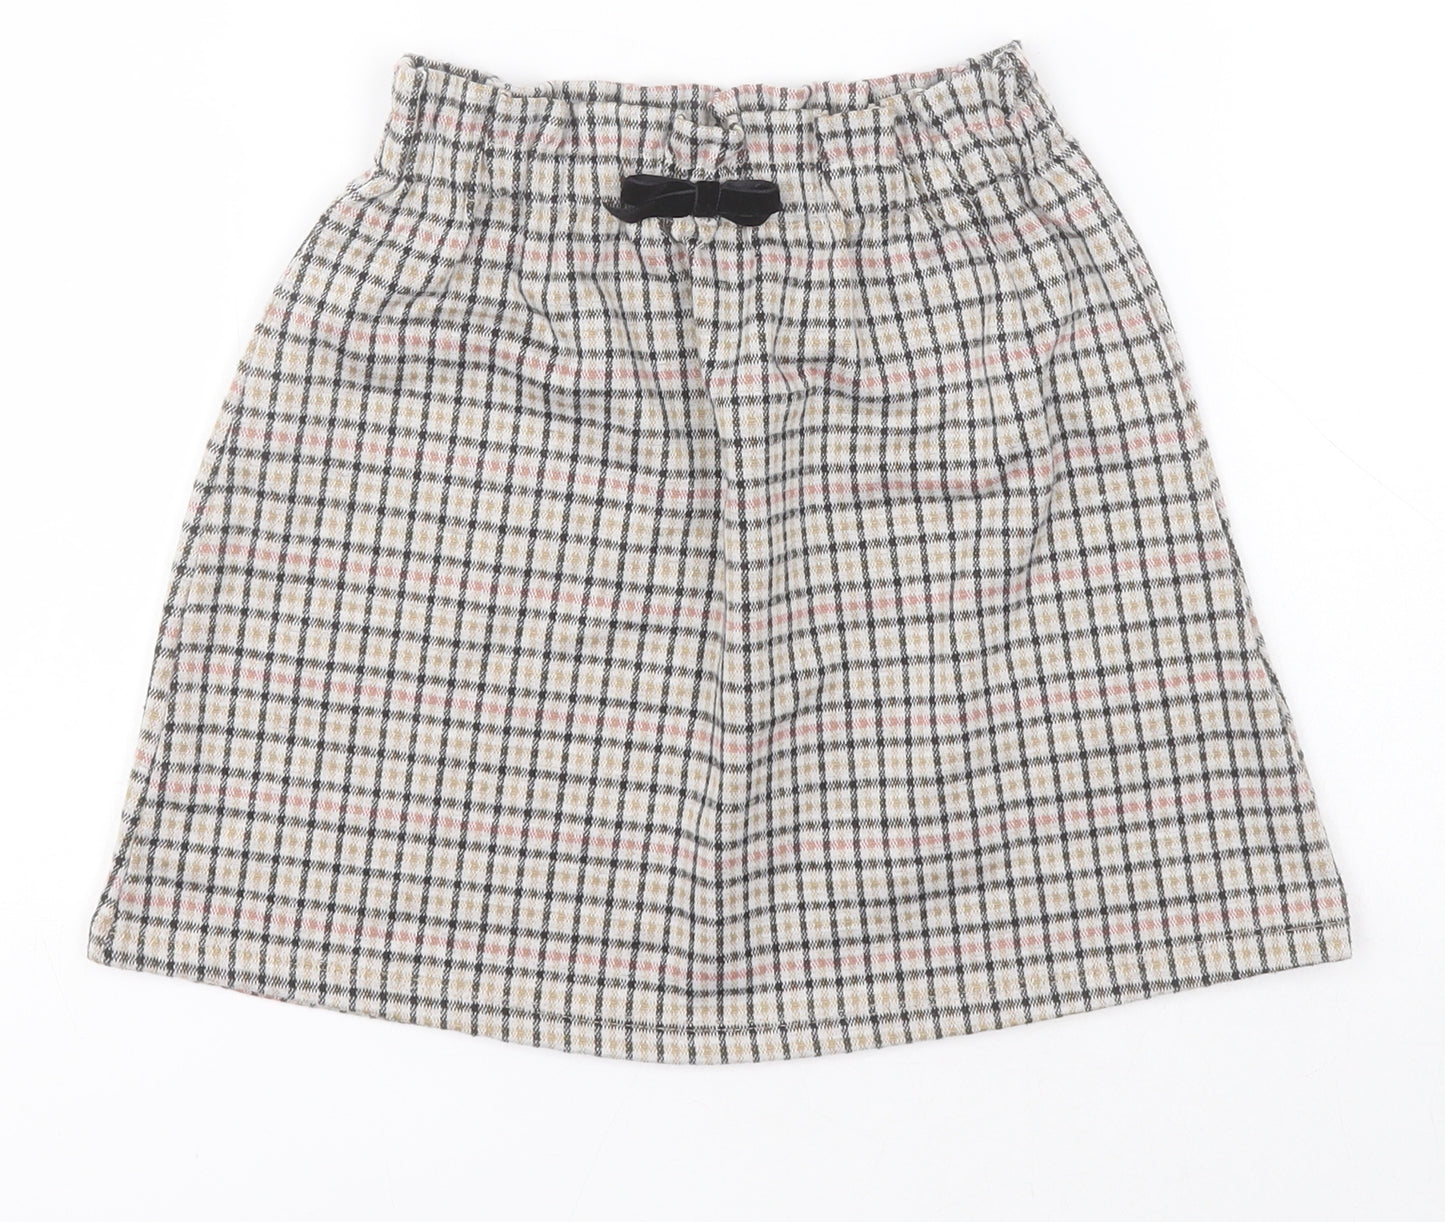 Primark Girls White Check Polyester A-Line Skirt Size 6-7 Years  Regular Pull On